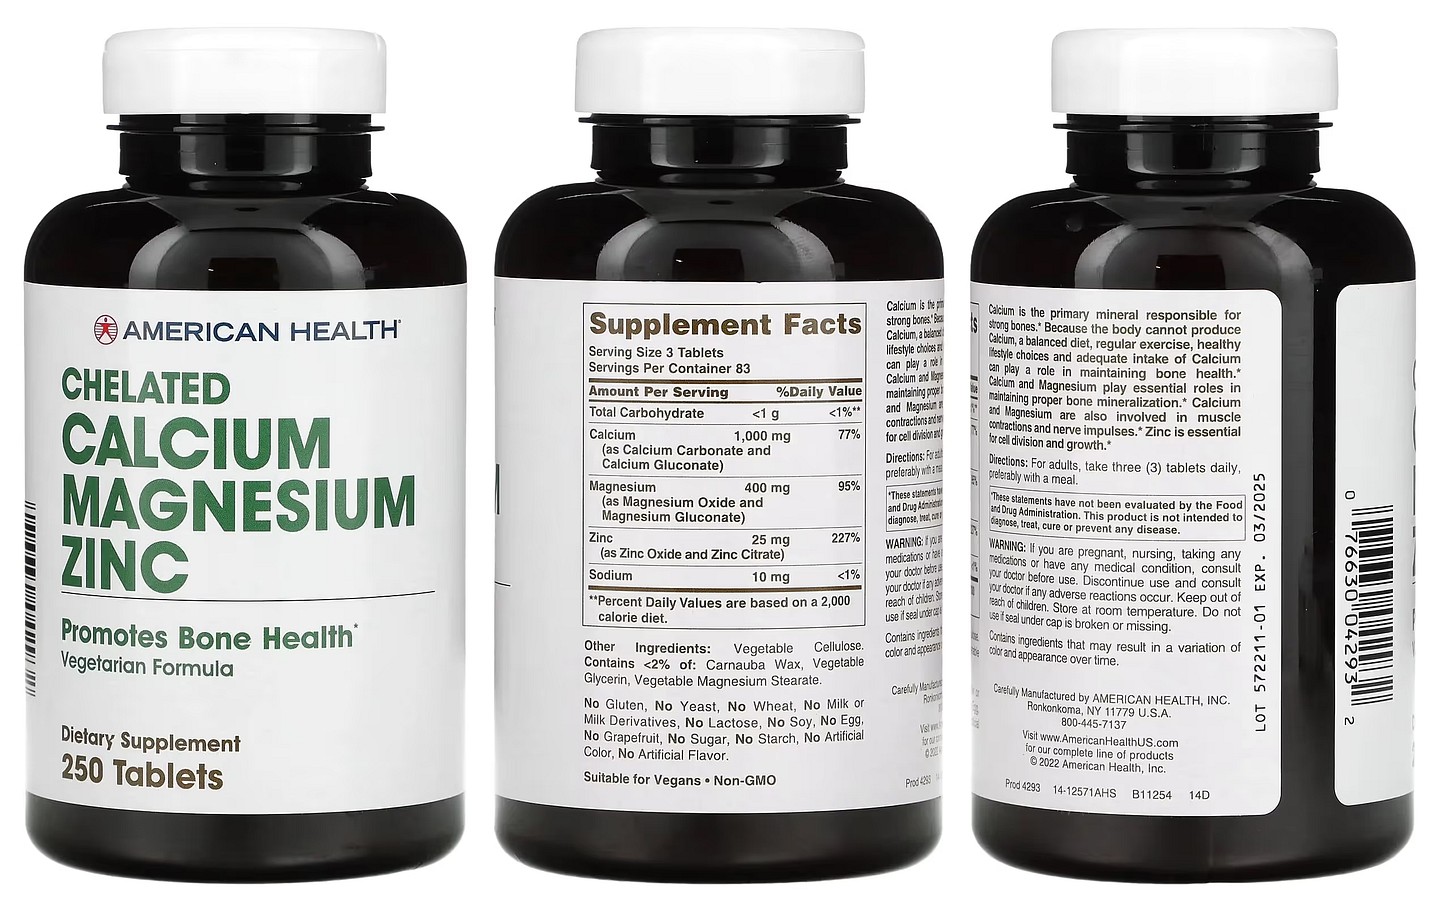 American Health, Chelated Calcium Magnesium Zinc packaging